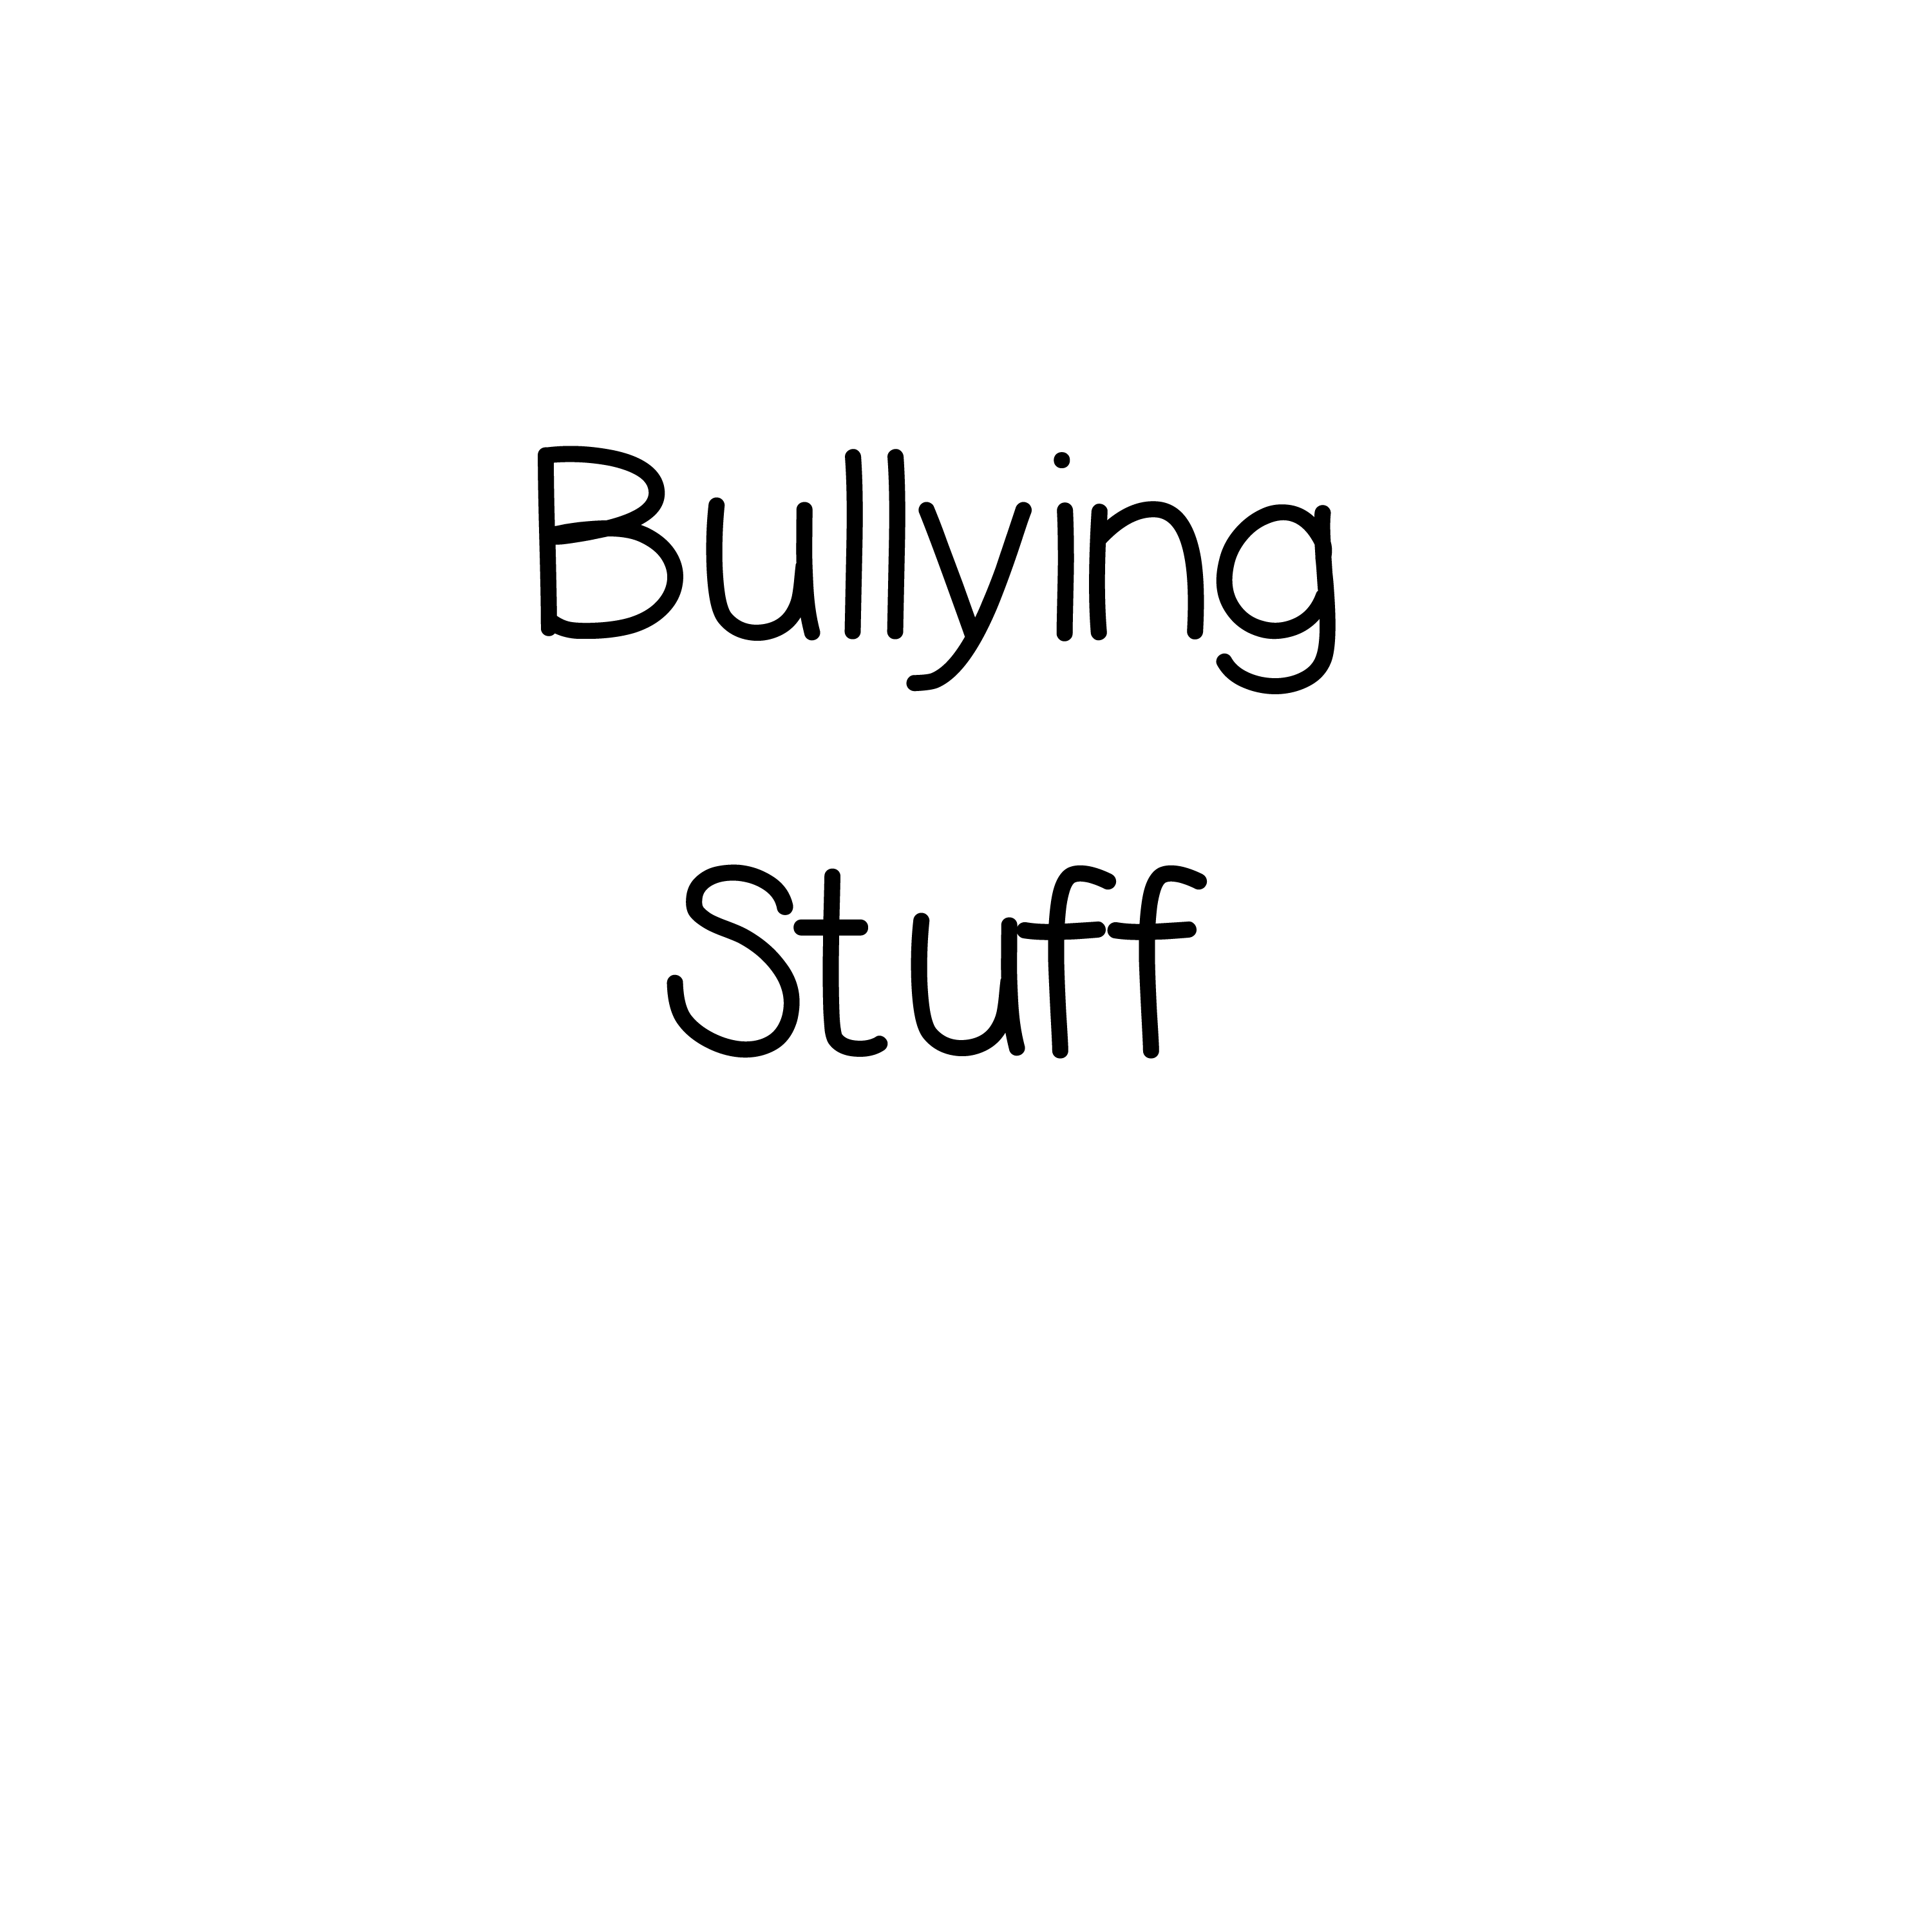 Bullying Stuff